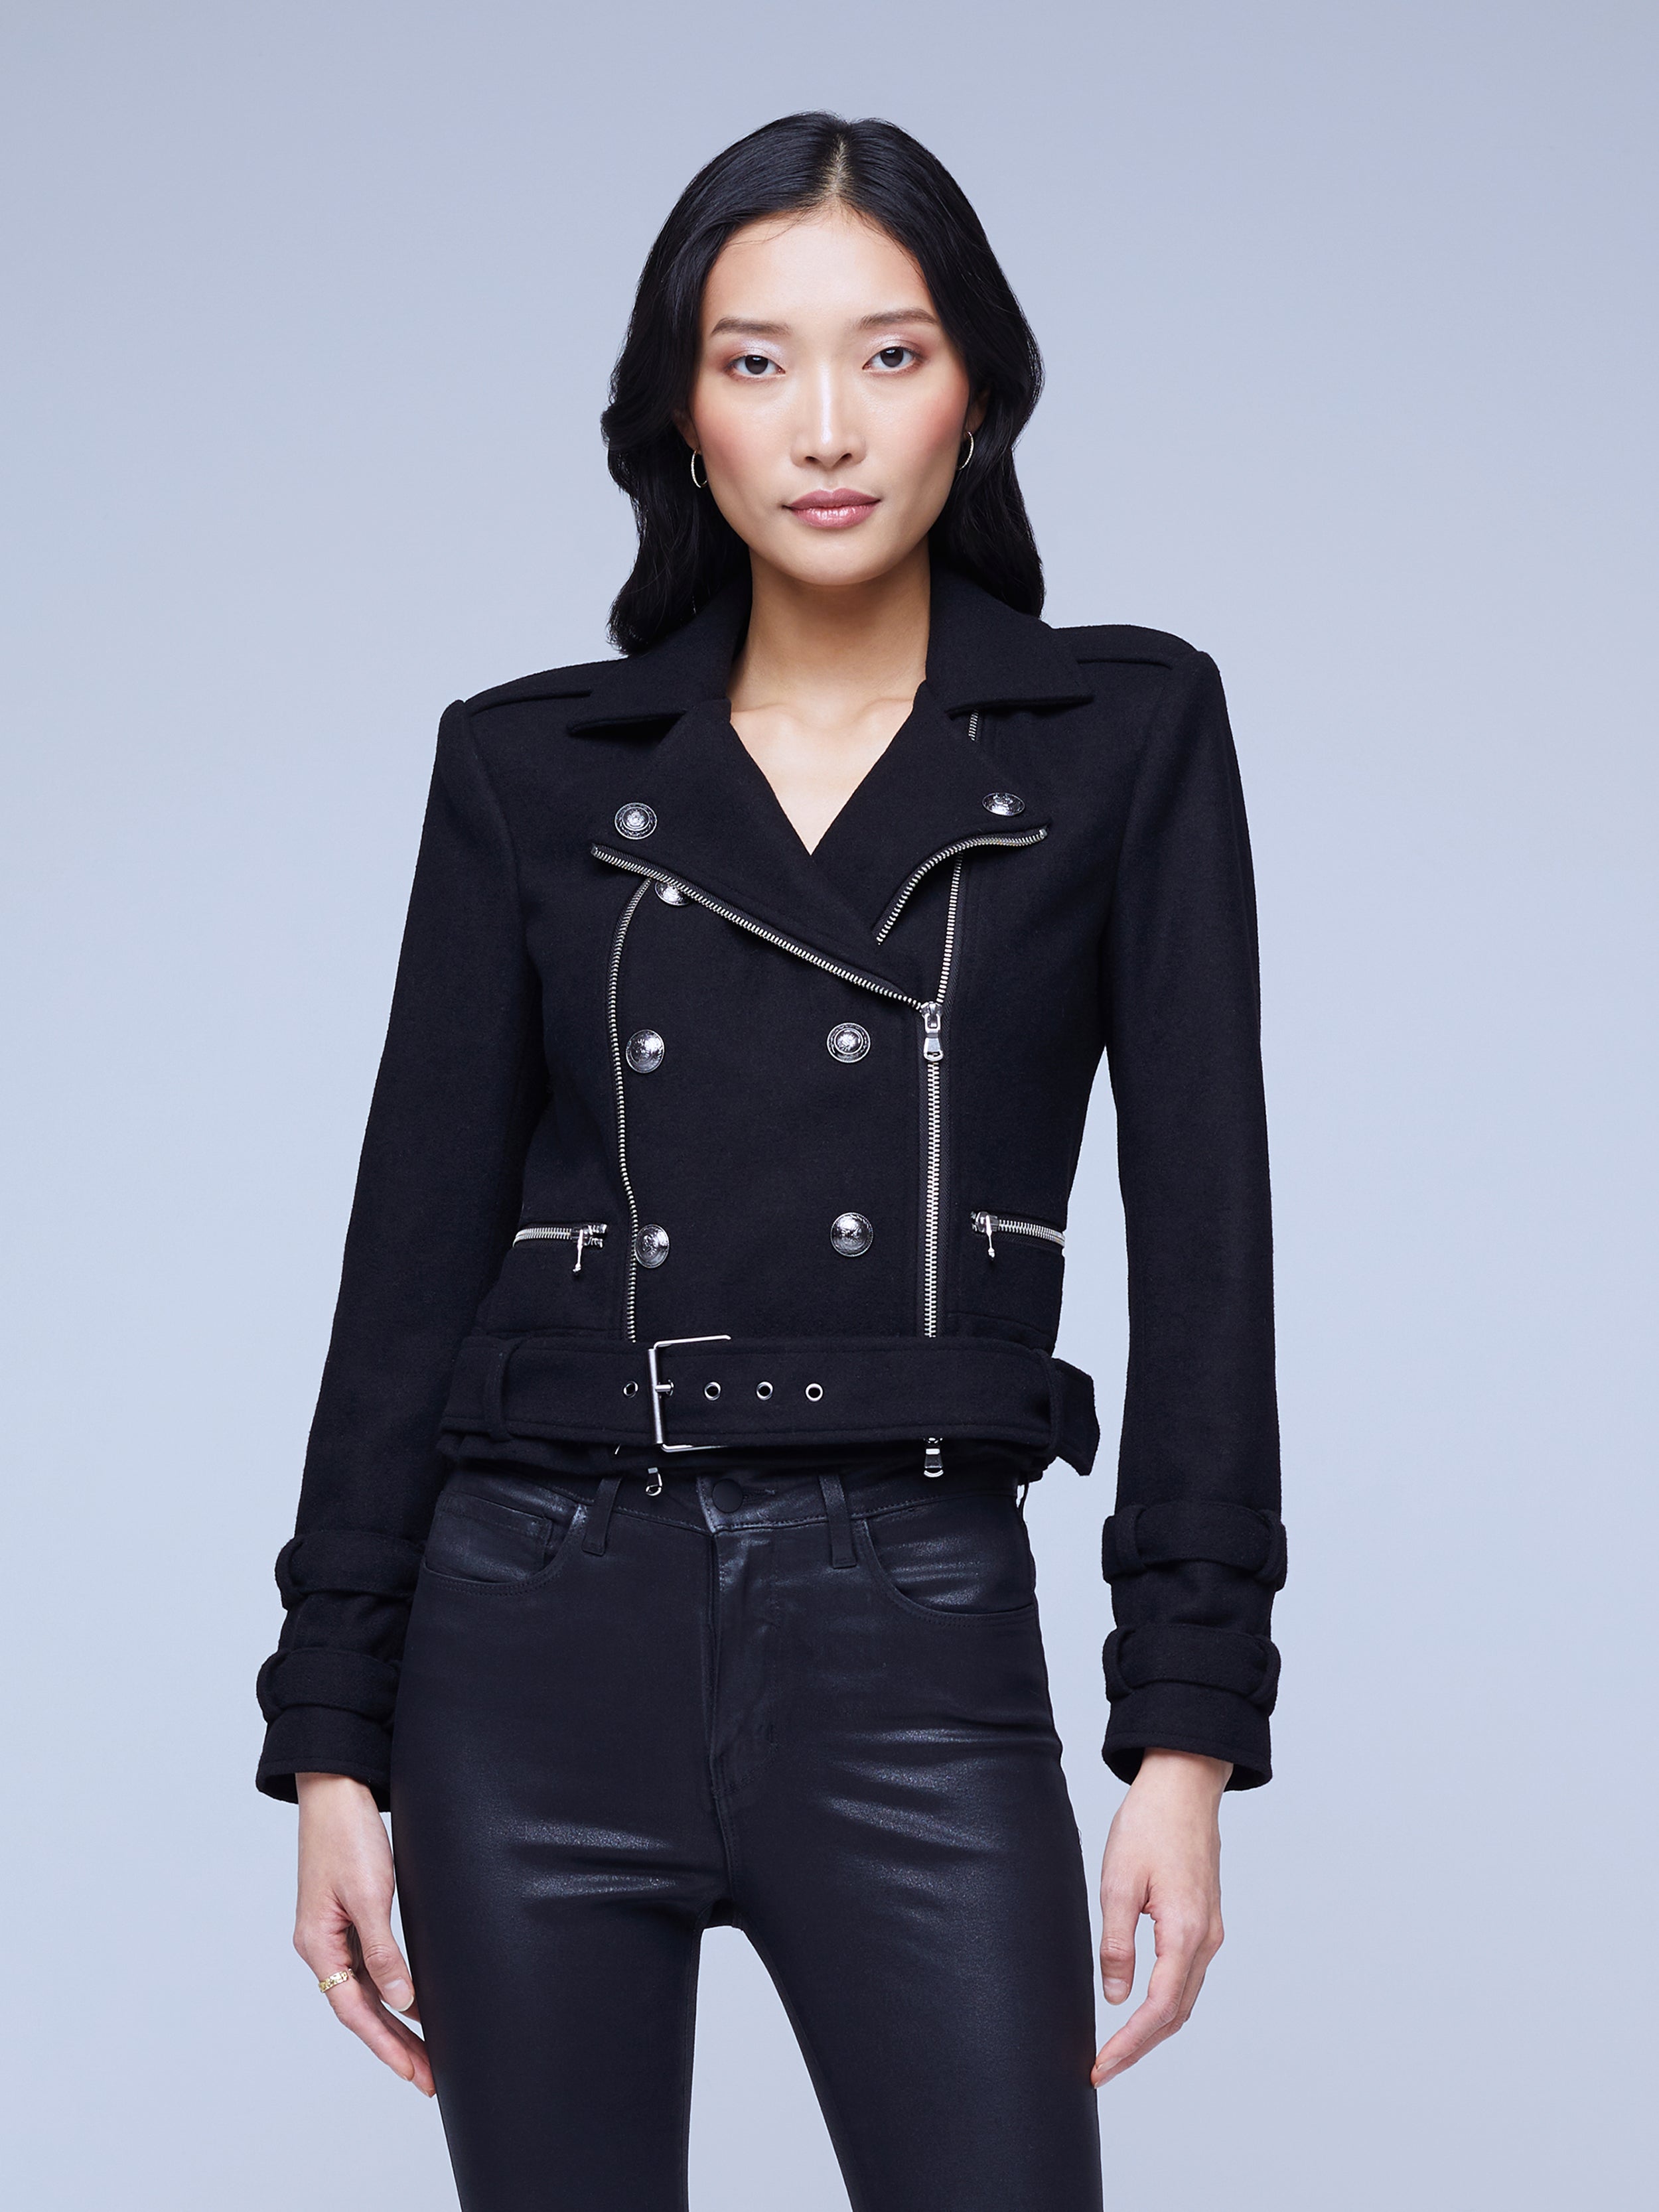 L'agence Baldwin Leather Jacket in White/Black Snake